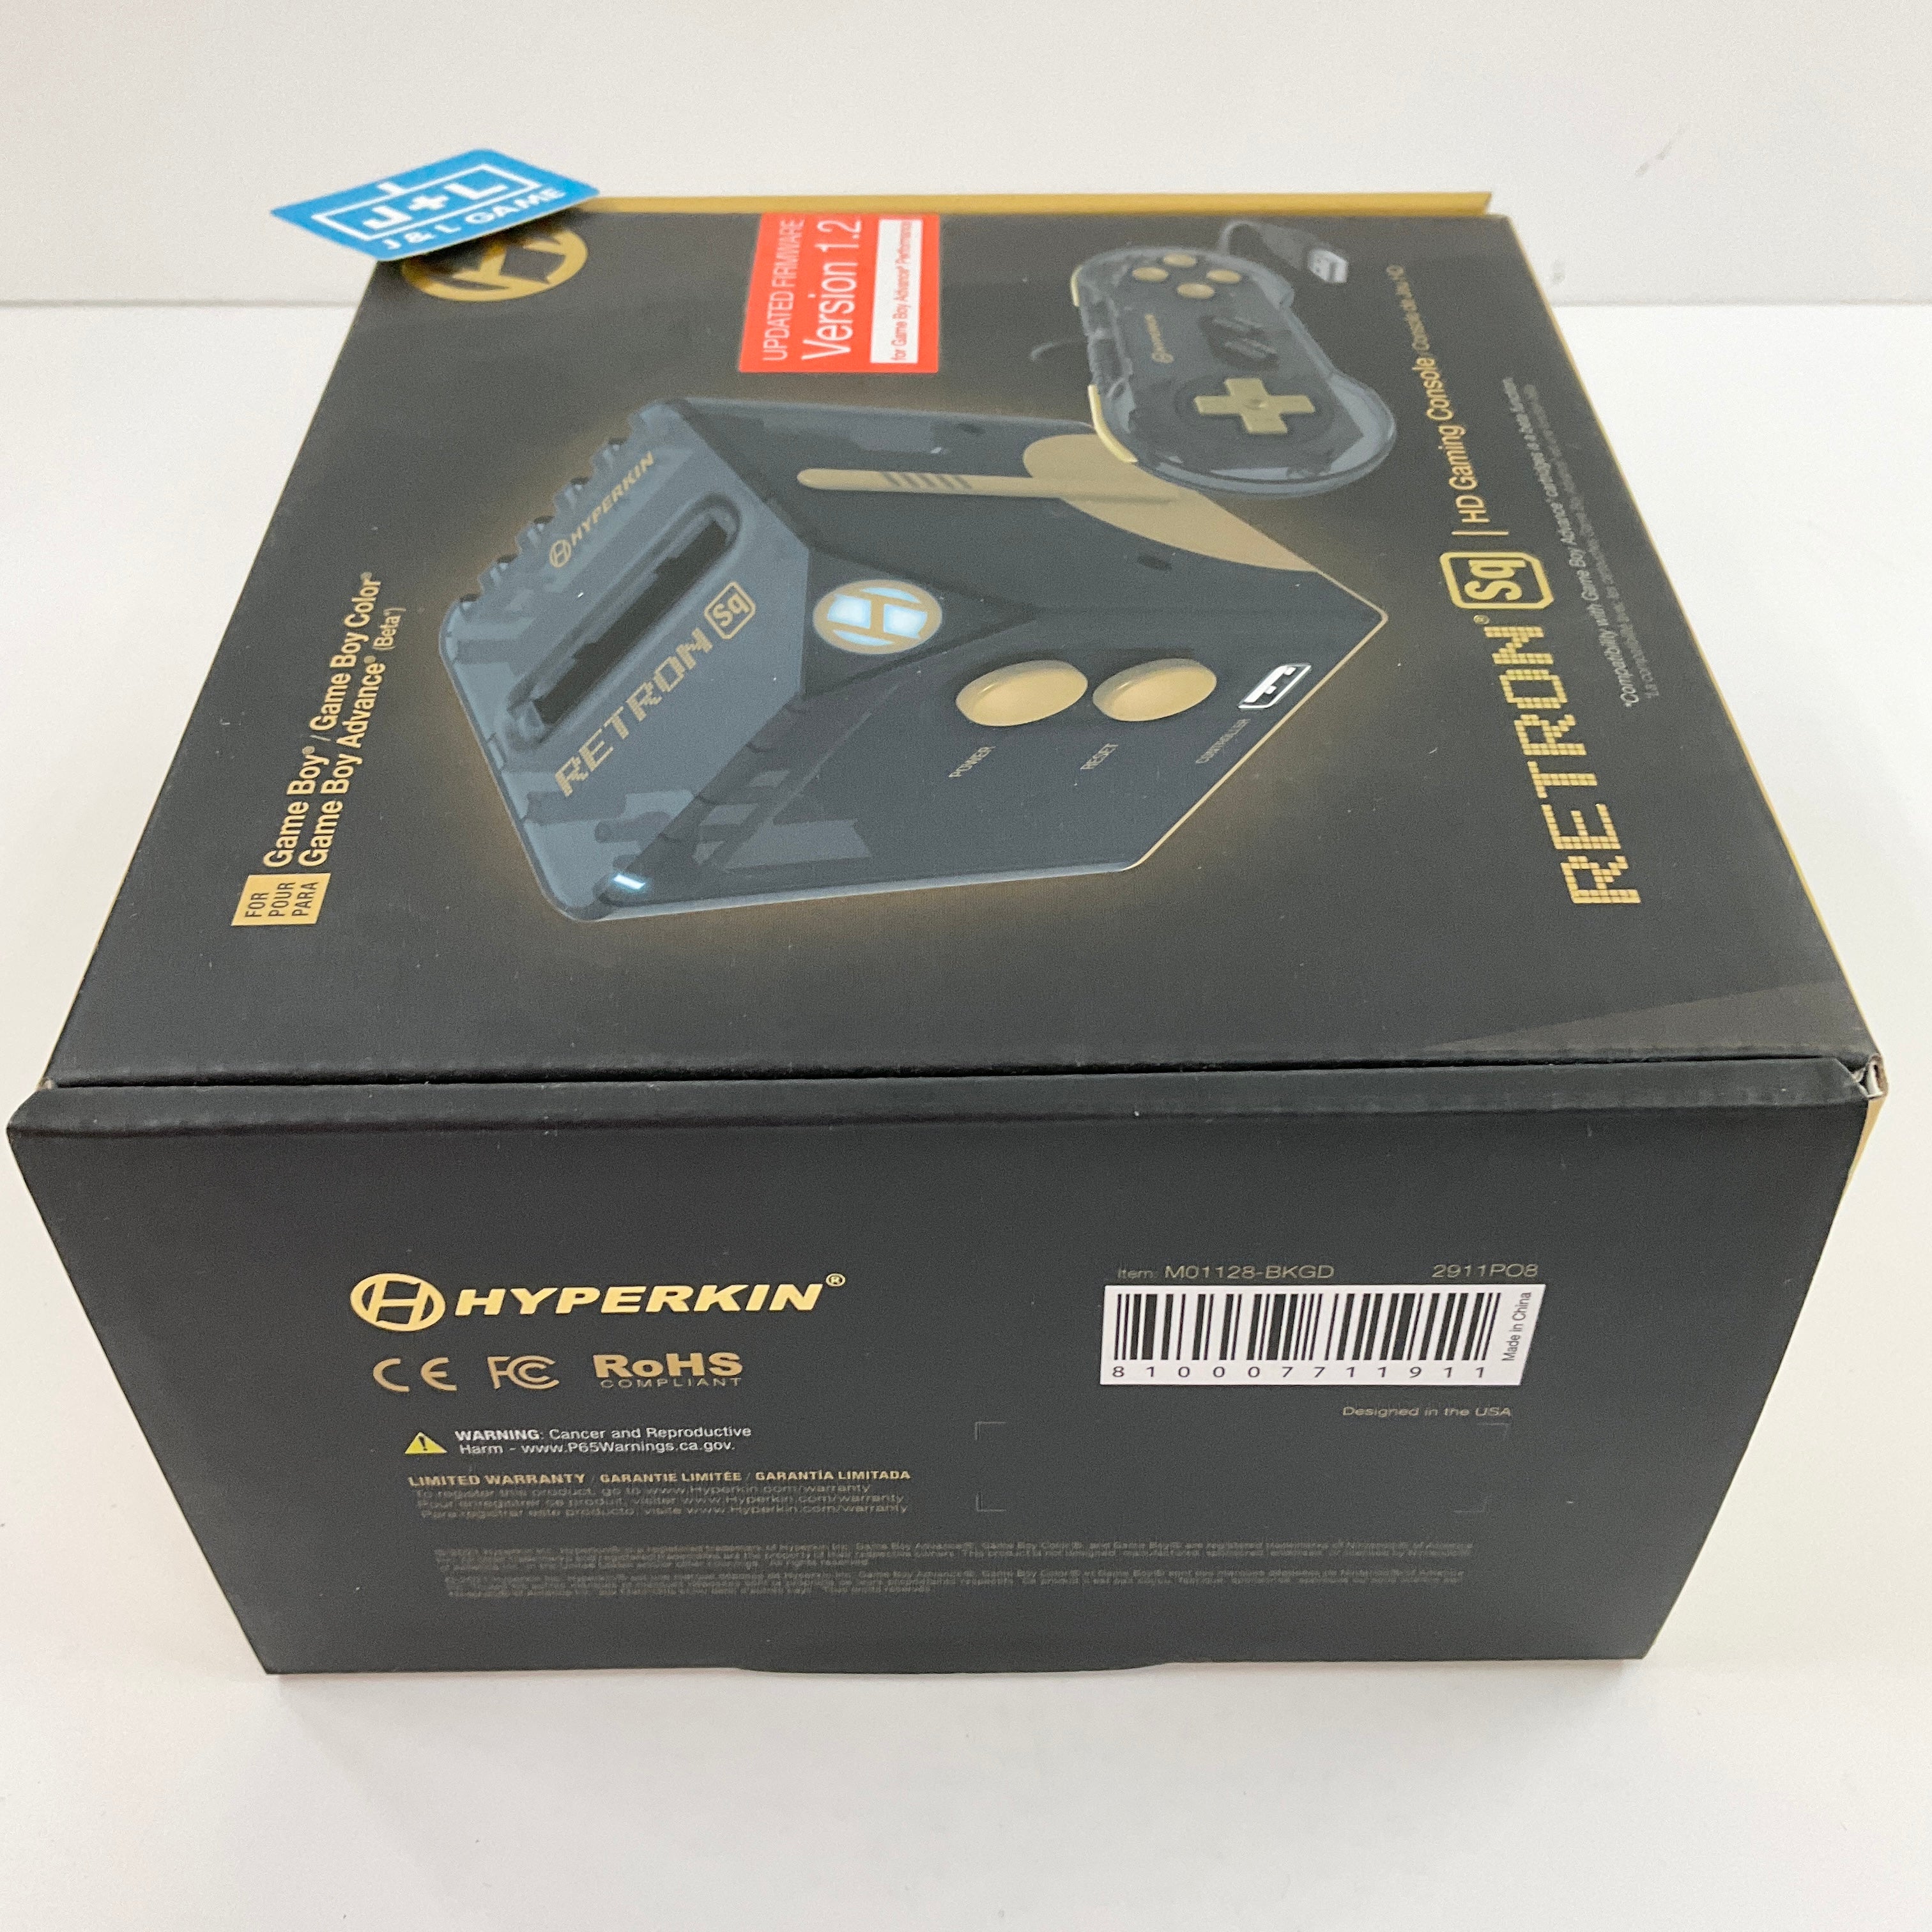 Hyperkin RetroN Sq: HD Gaming Console for Game Boy/Color/ Game Boy Advance (Black & Gold) - Game Boy Advance [UNBOXING] CONSOLE Hyperkin   